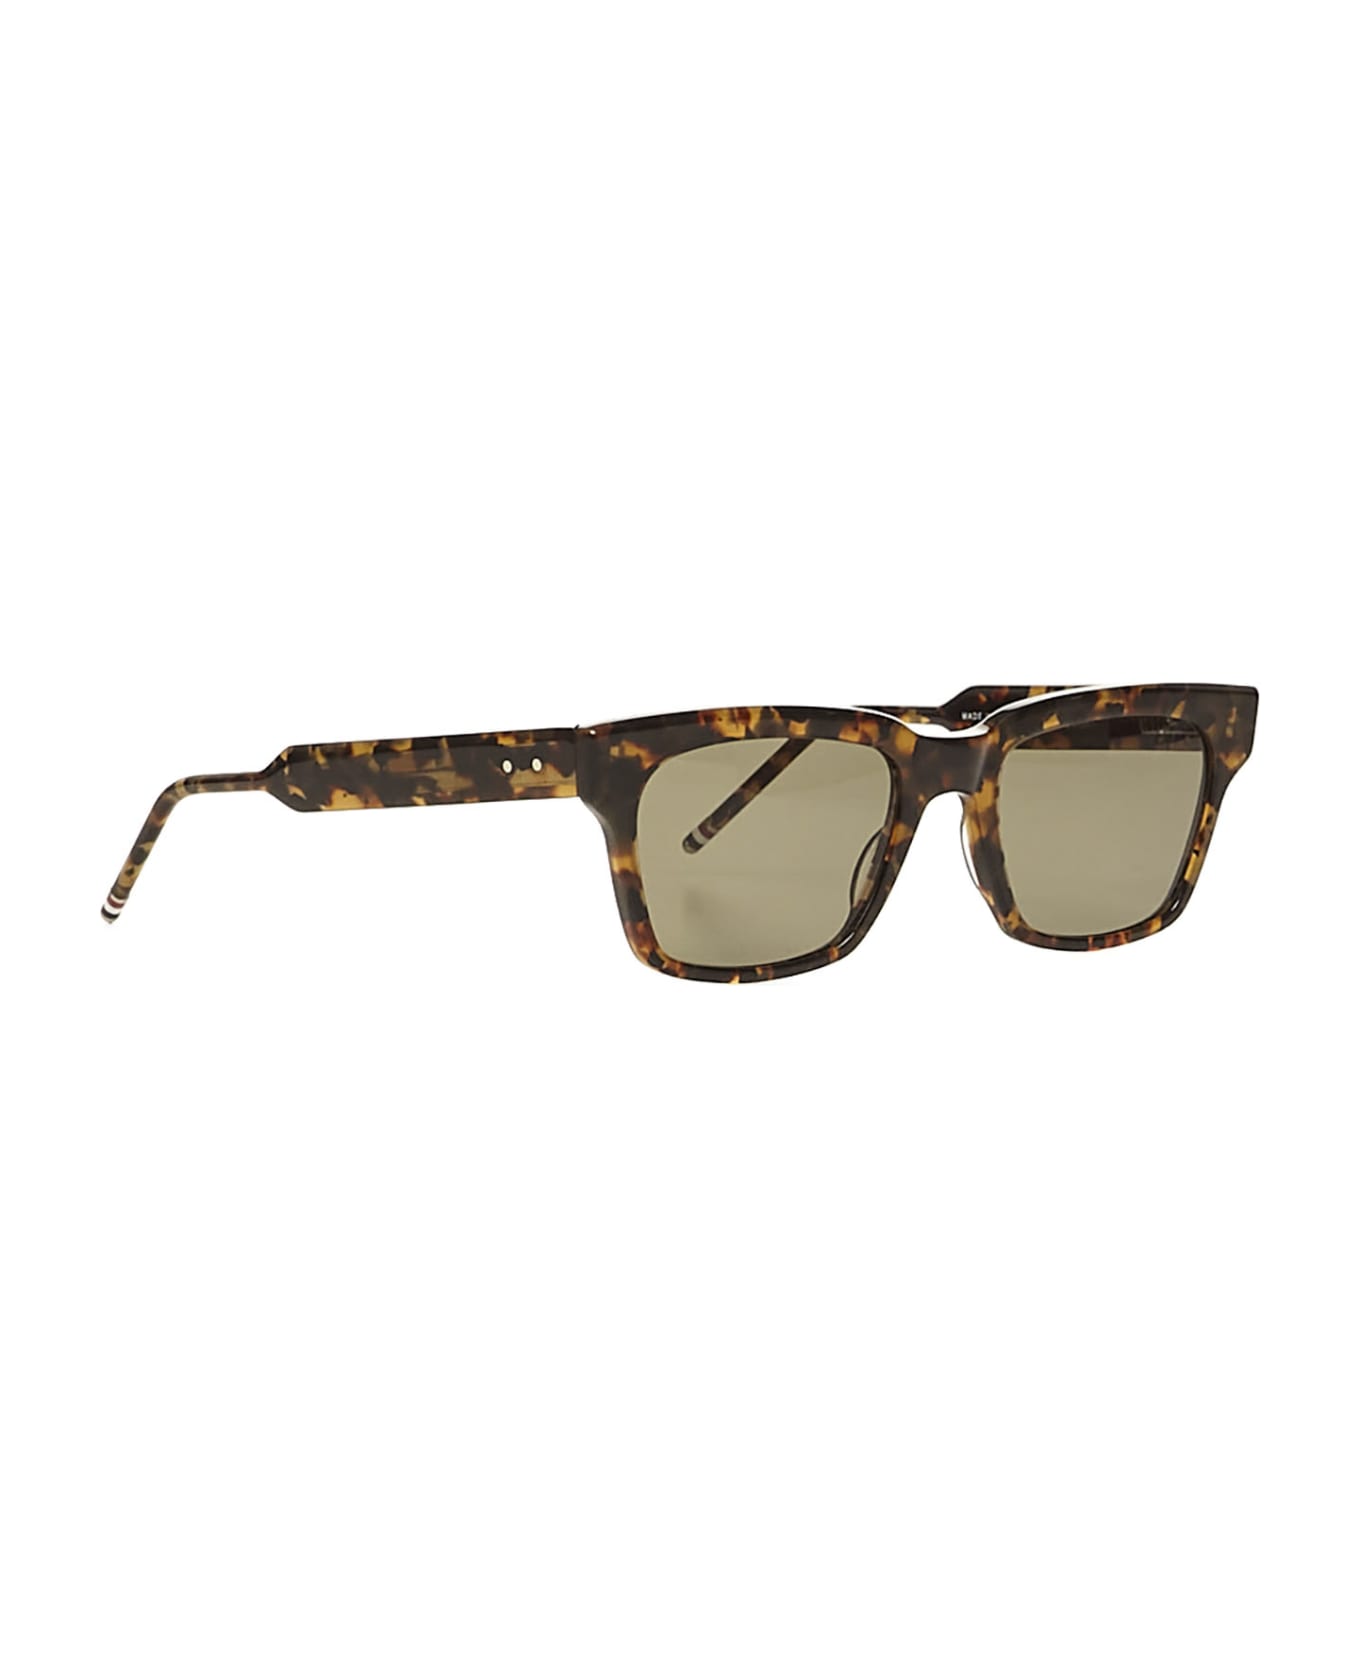 Thom Browne Sunglasses Tb418 Sunglasses - Brown